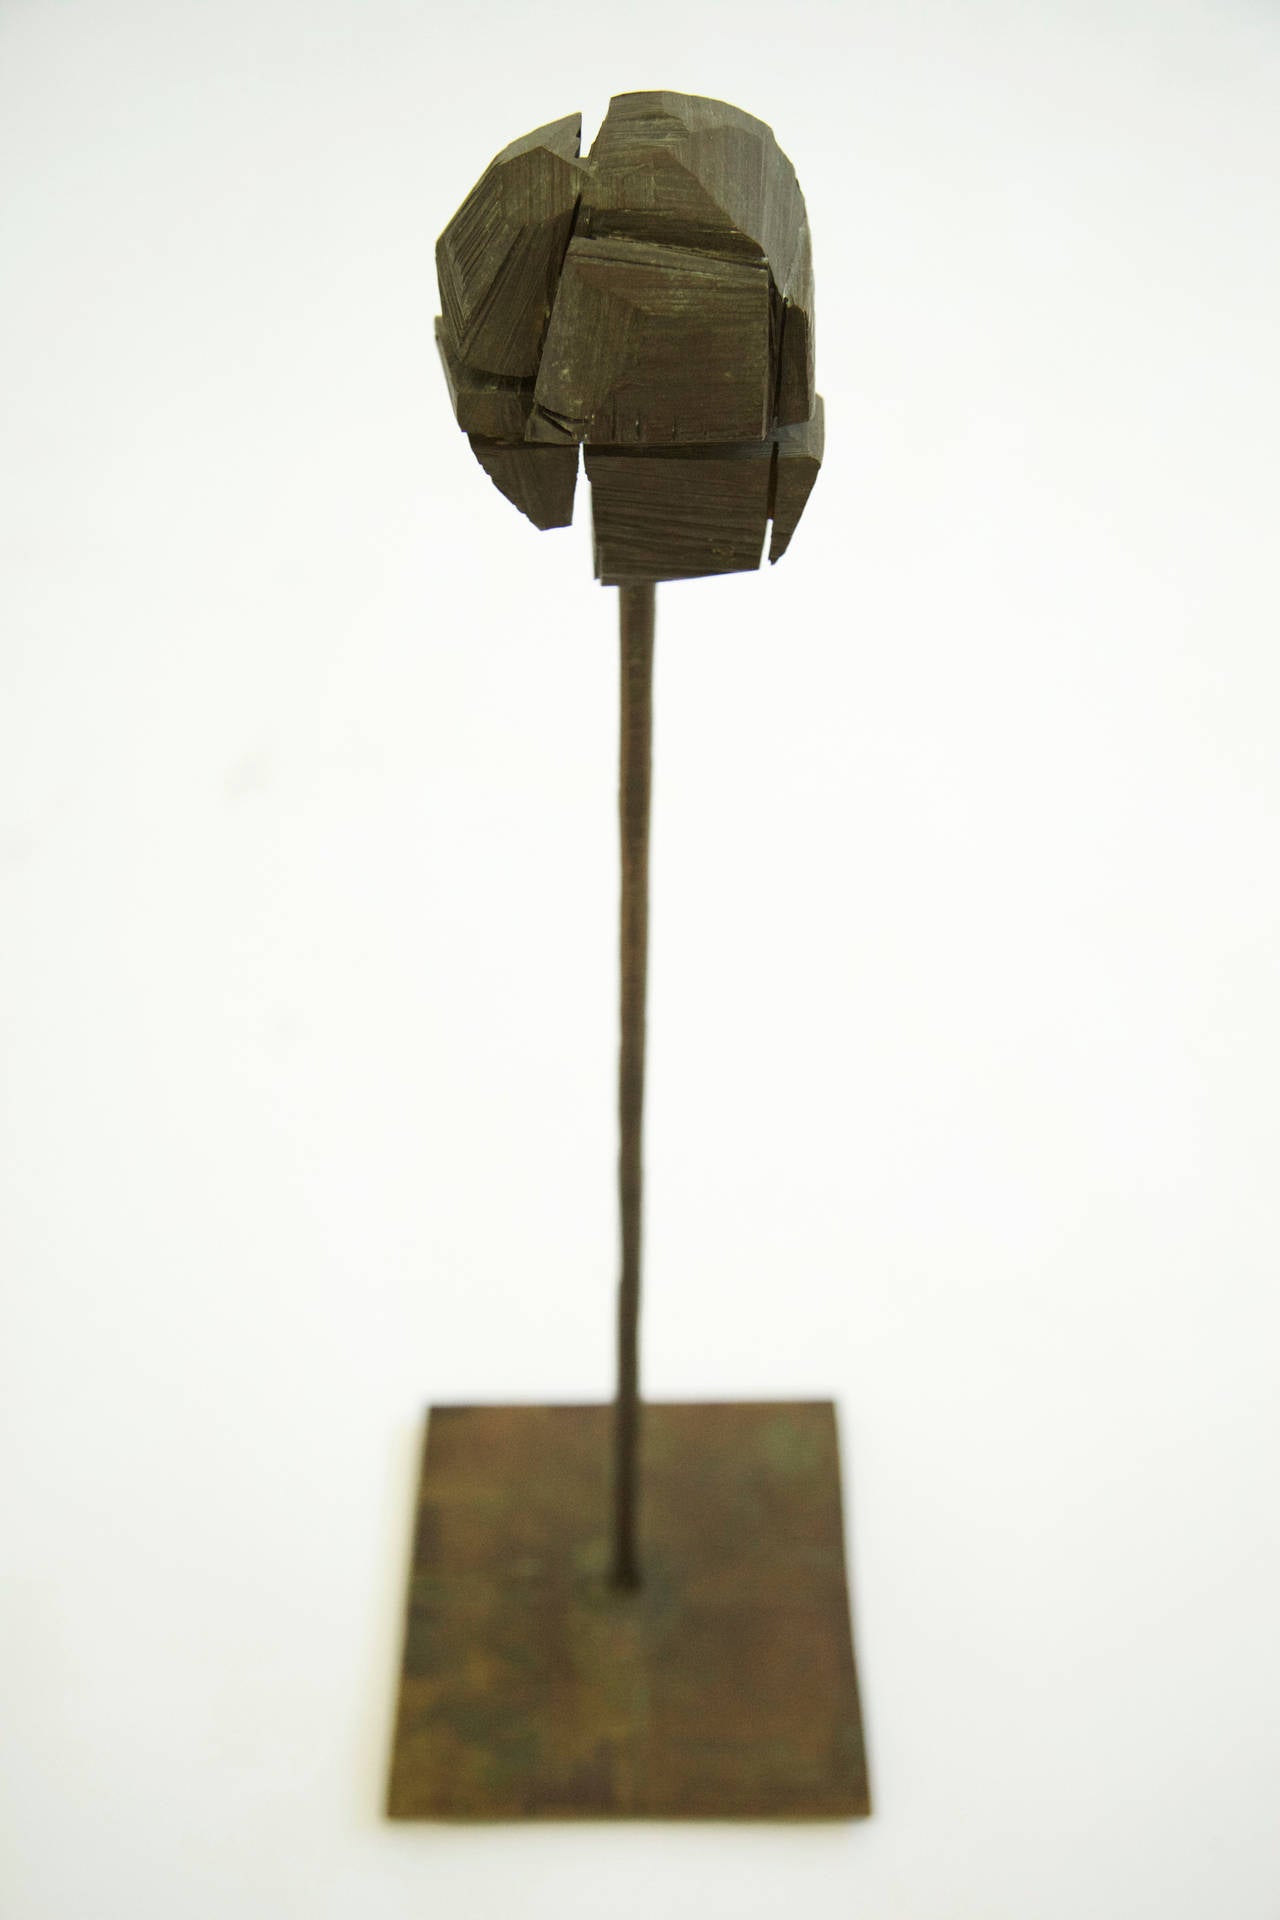 Rosenthal bronze sculpture.
1965, untitled.
Stamped 